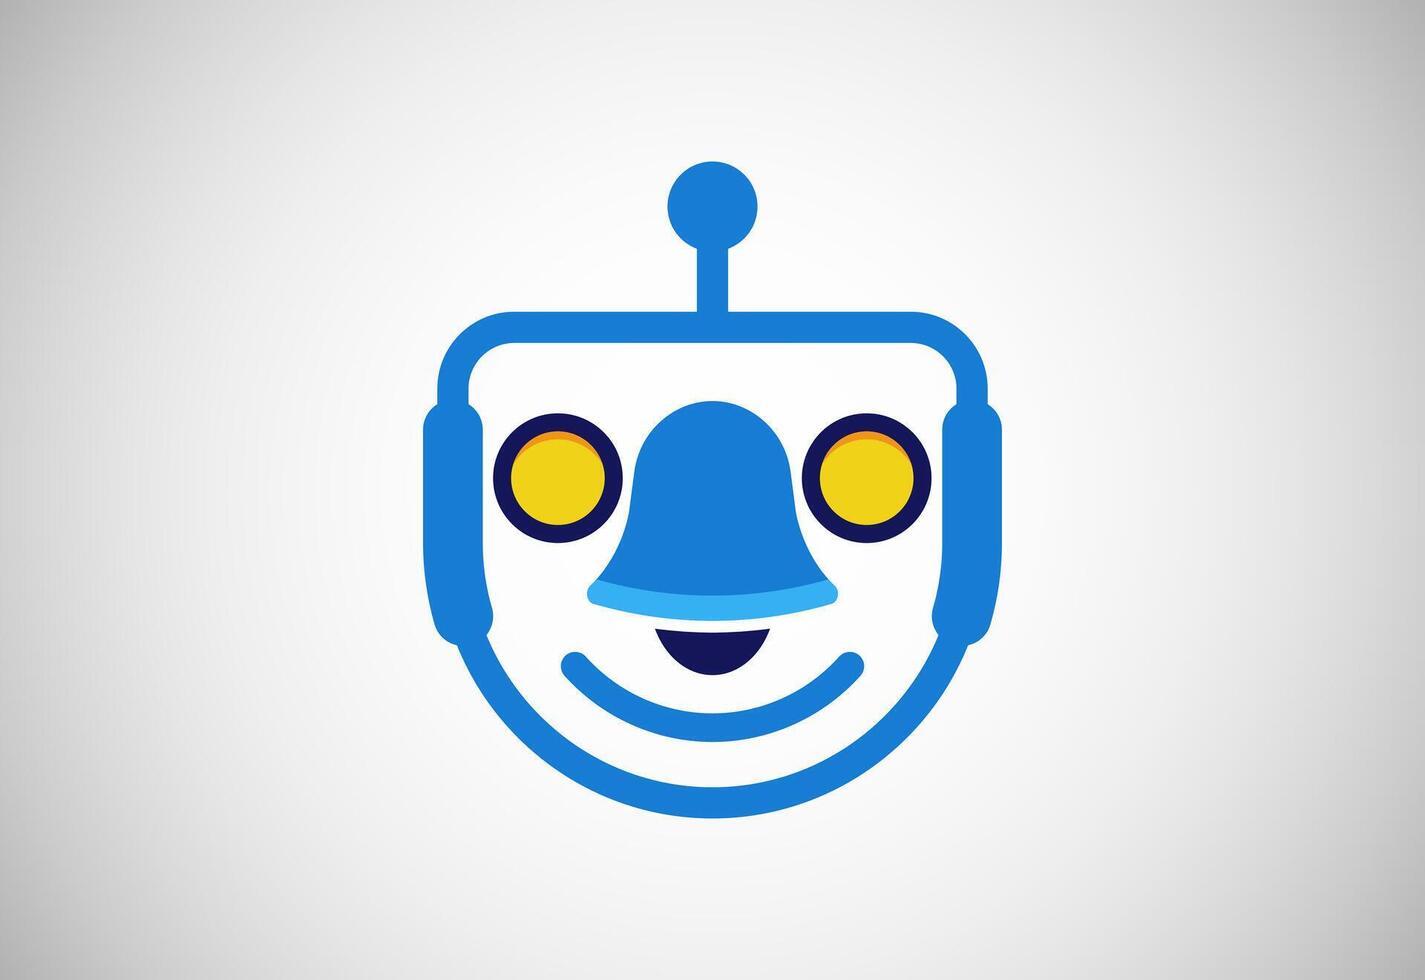 Robot bell logo design illustration vector